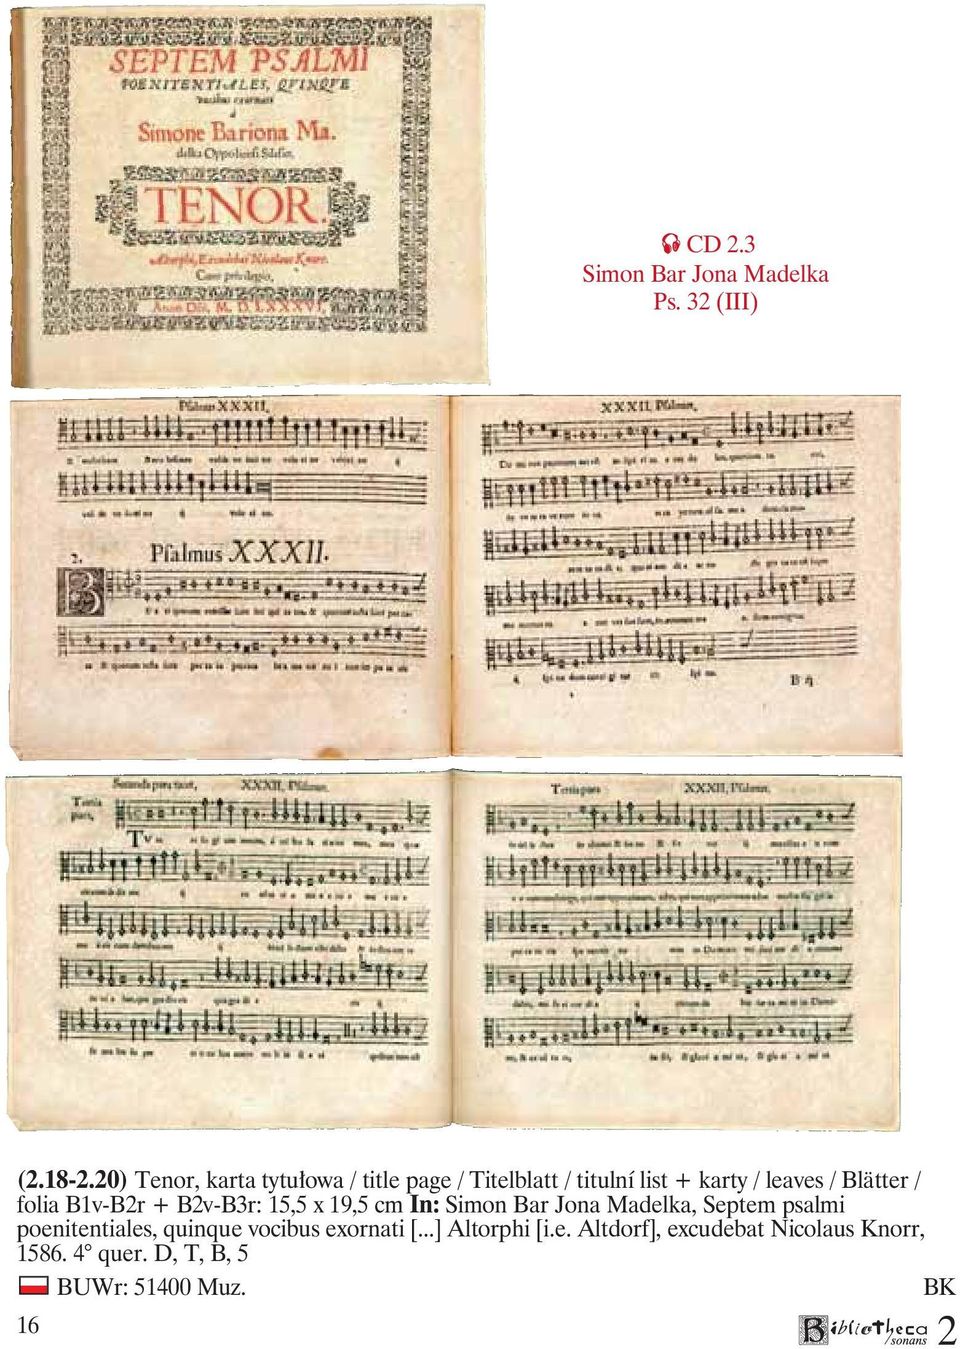 Blätter / folia B1v-Br + Bv-B3r: 15,5 x 19,5 cm In: Simon Bar Jona Madelka, Septem psalmi